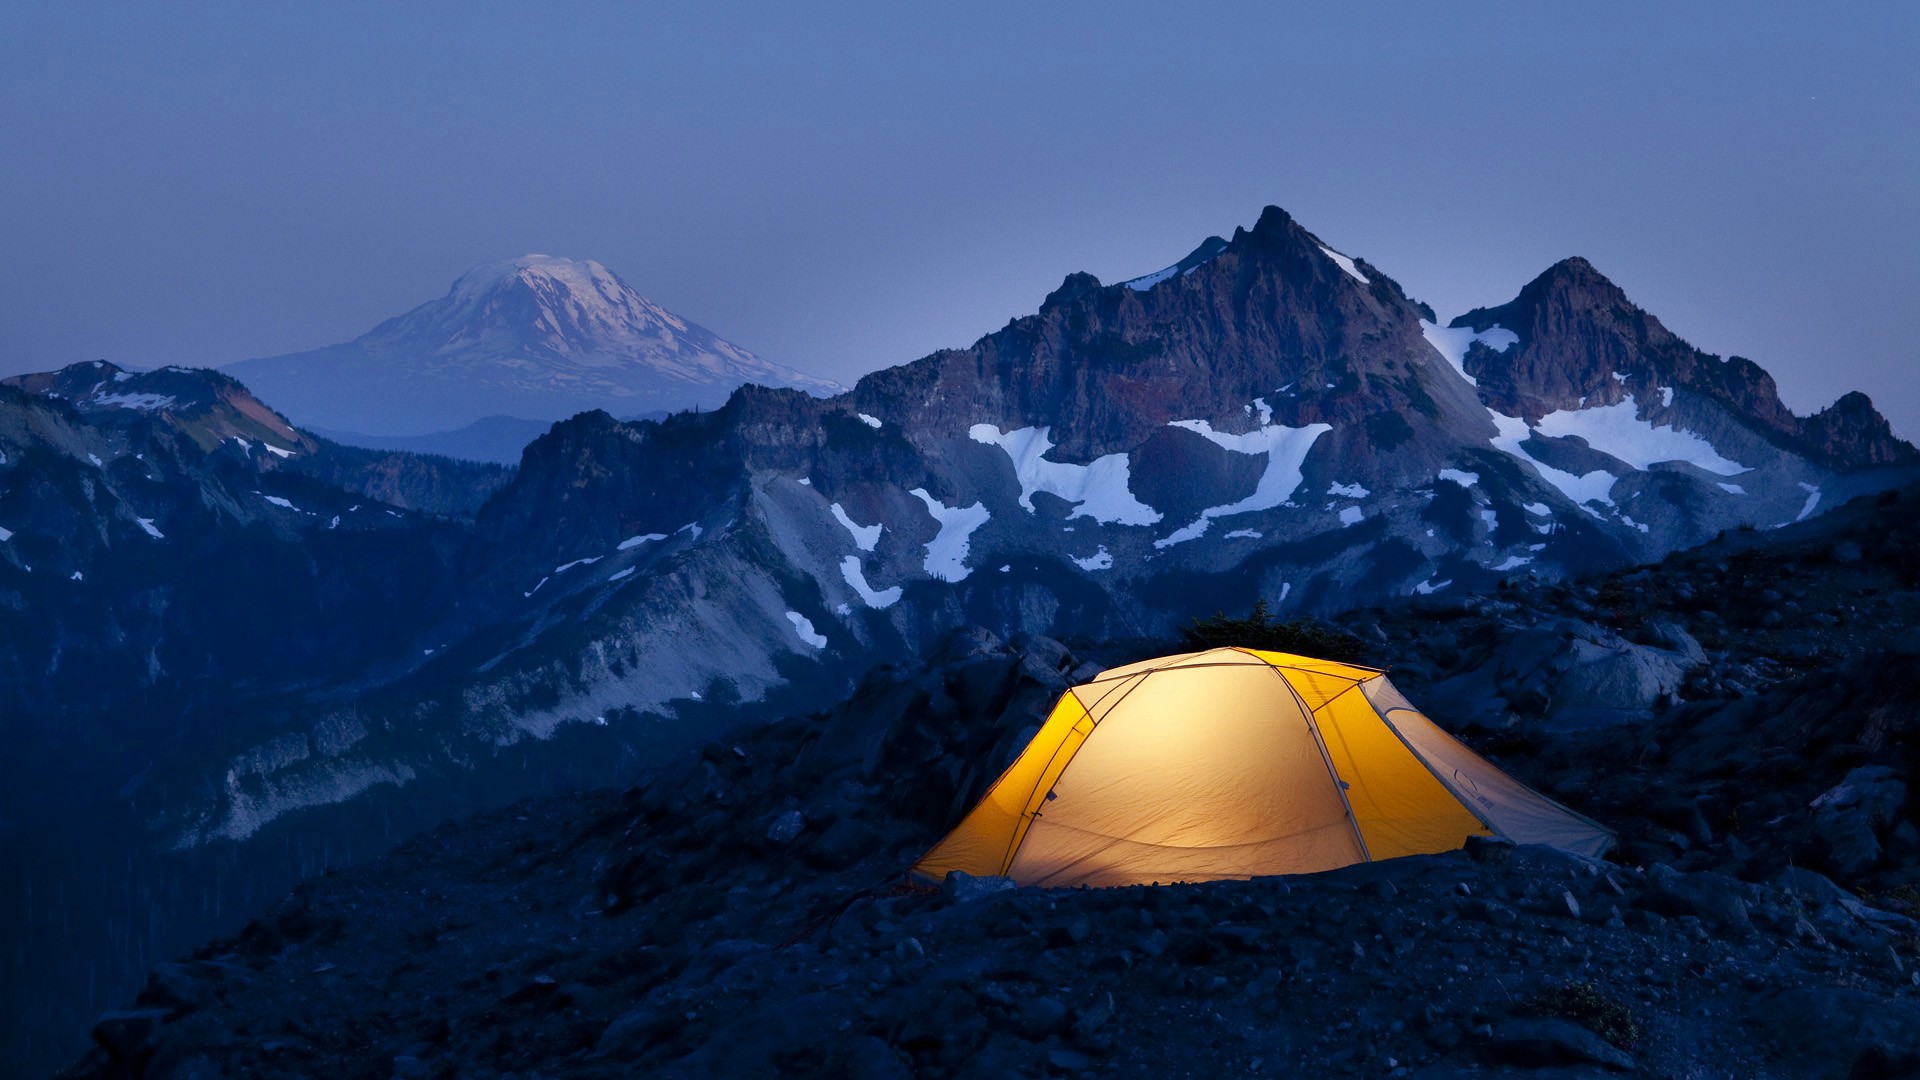 Mountain Snow Night Camping Tent 1920x1080